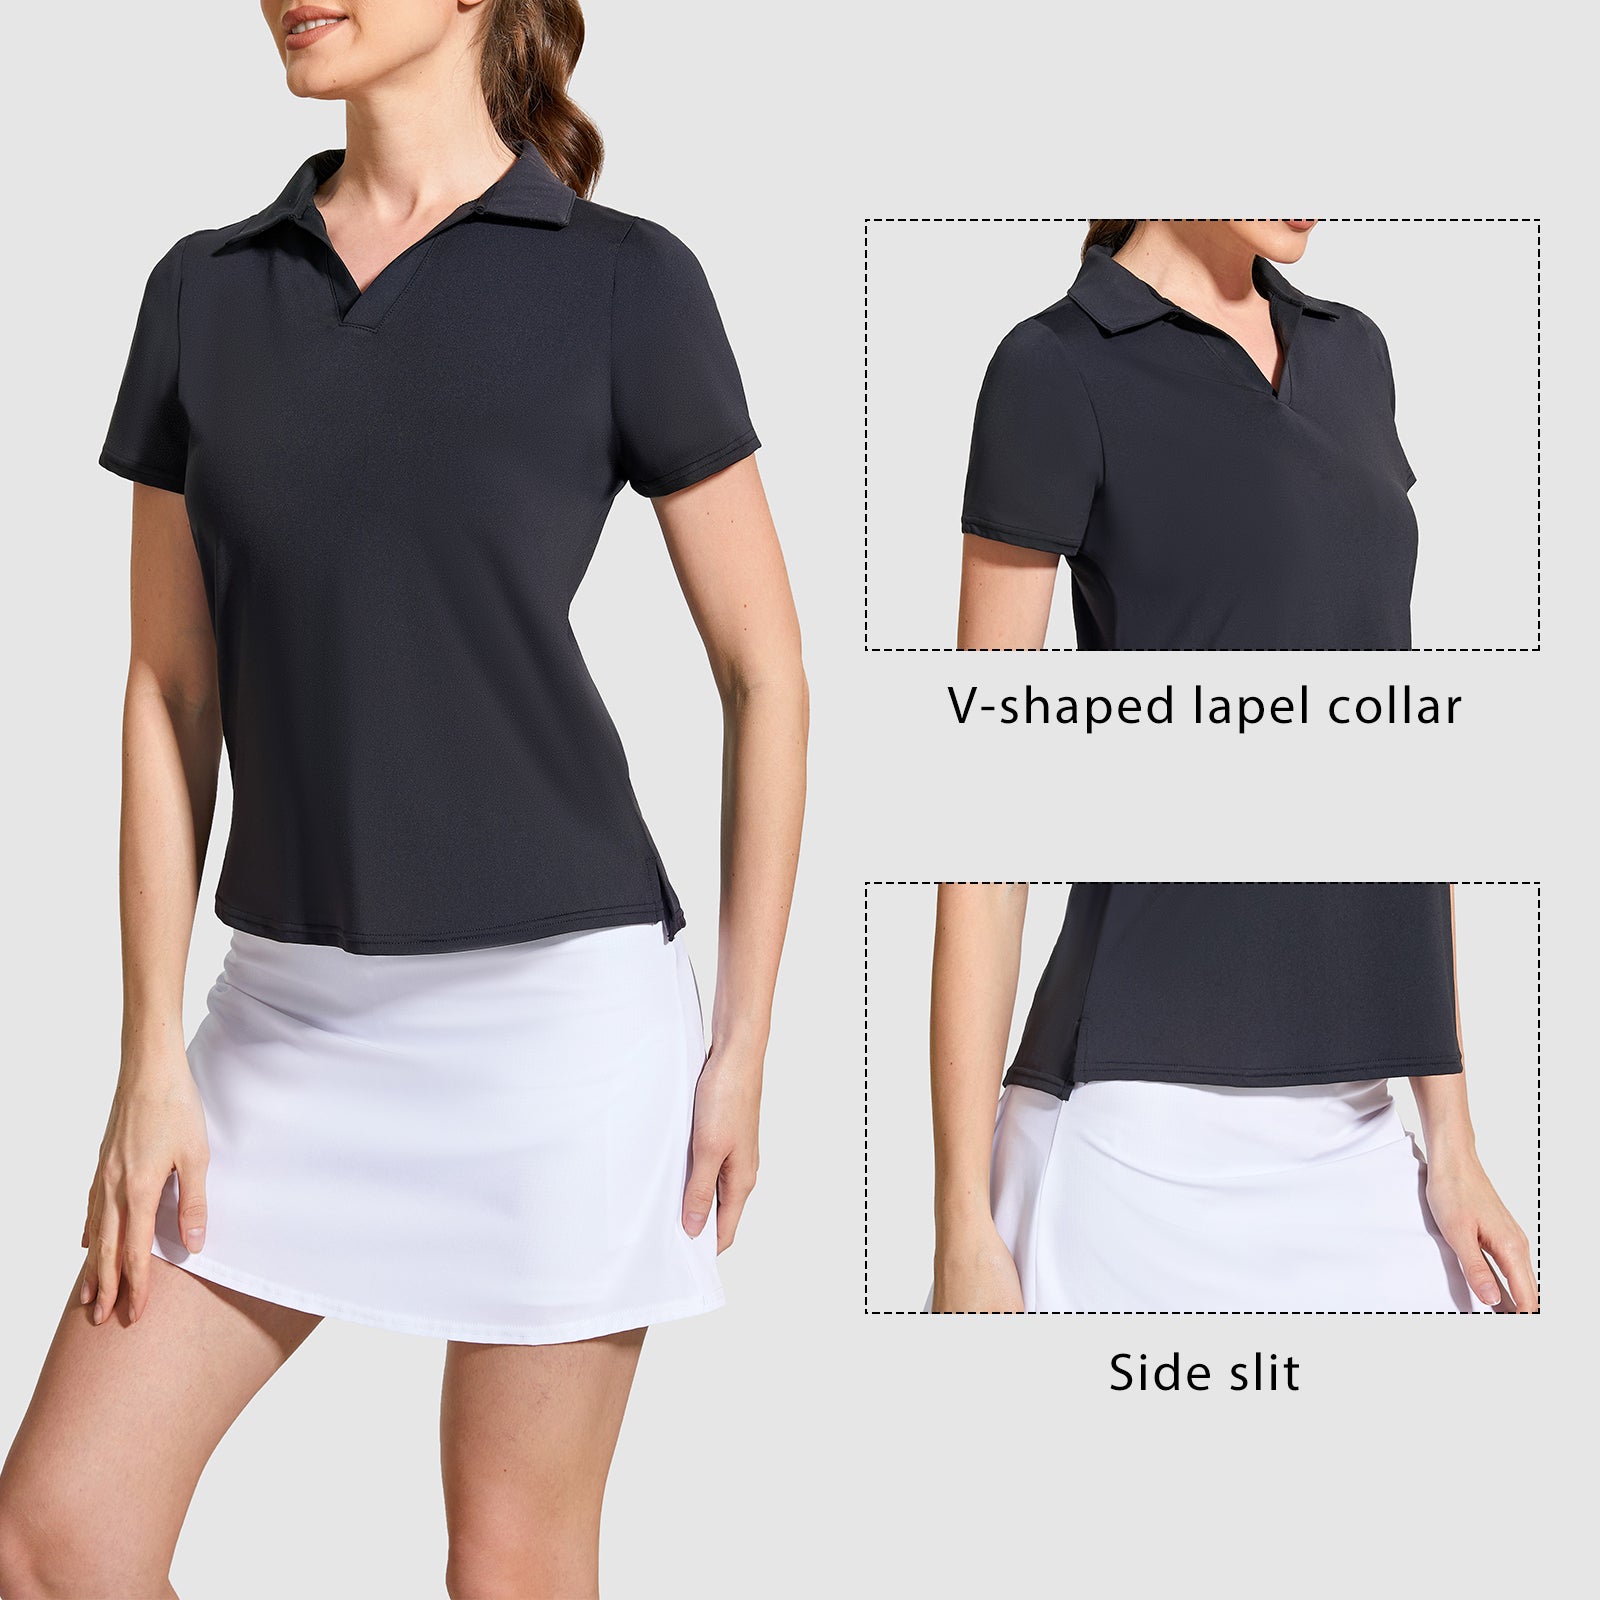 MOTEEPI Women's Short Sleeve Quick Dry Golf Shirt